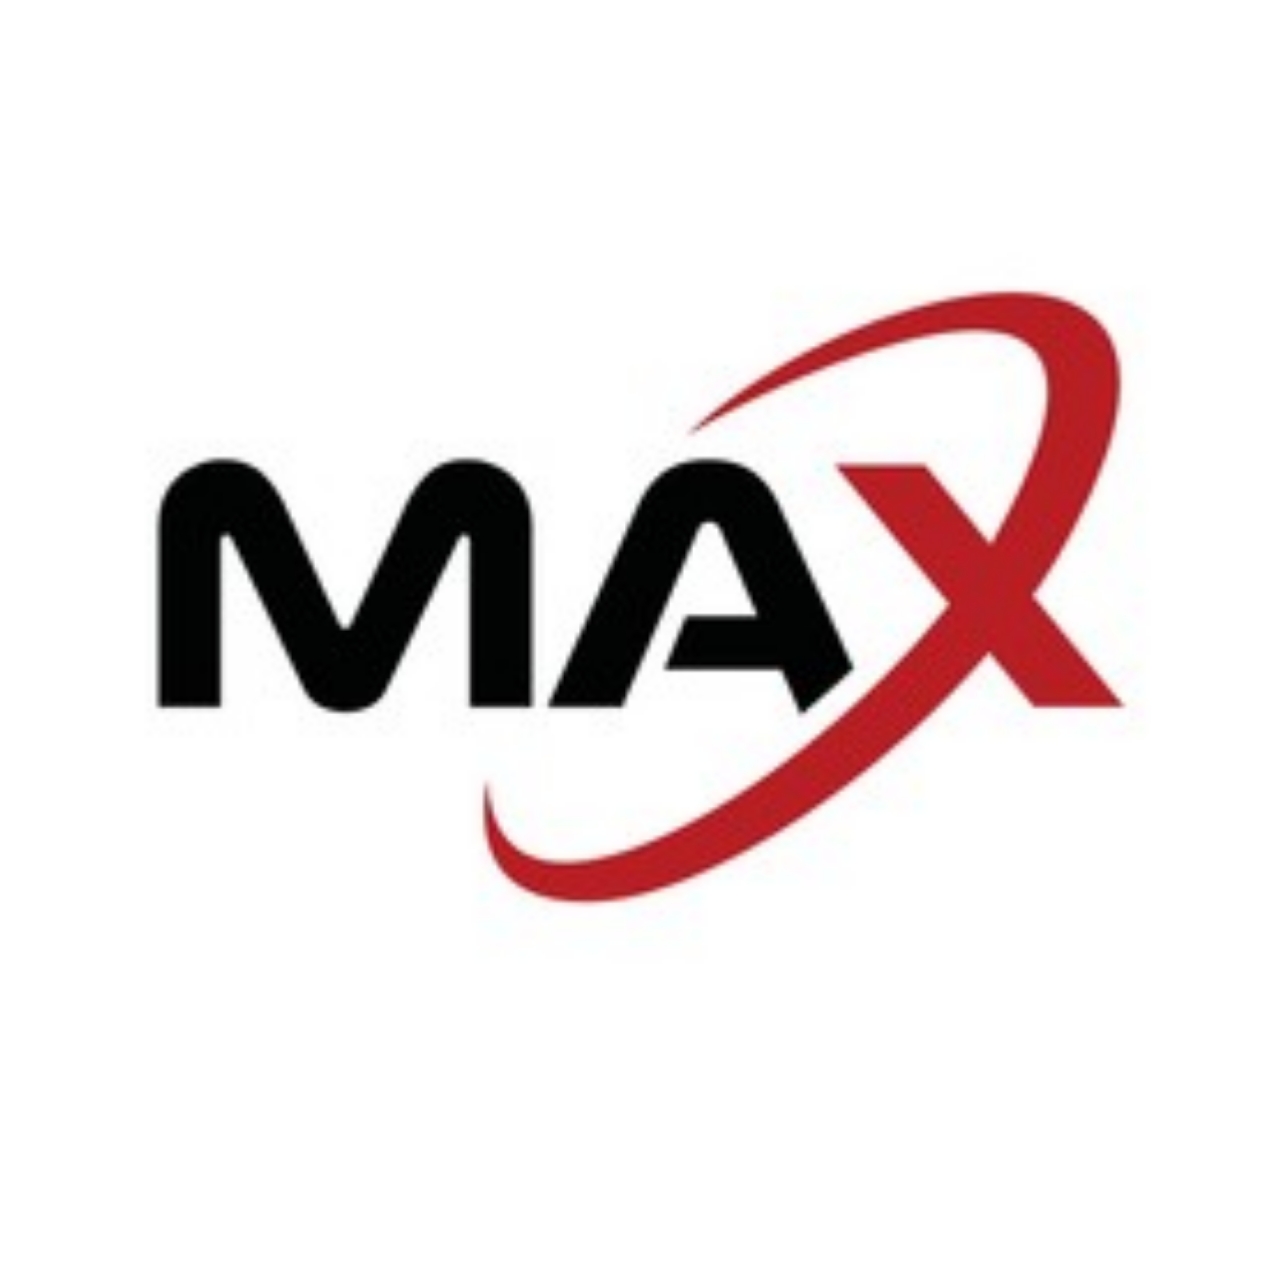 Max companies. Max логотип. Авиасалон Макс логотип. Maxam логотип.